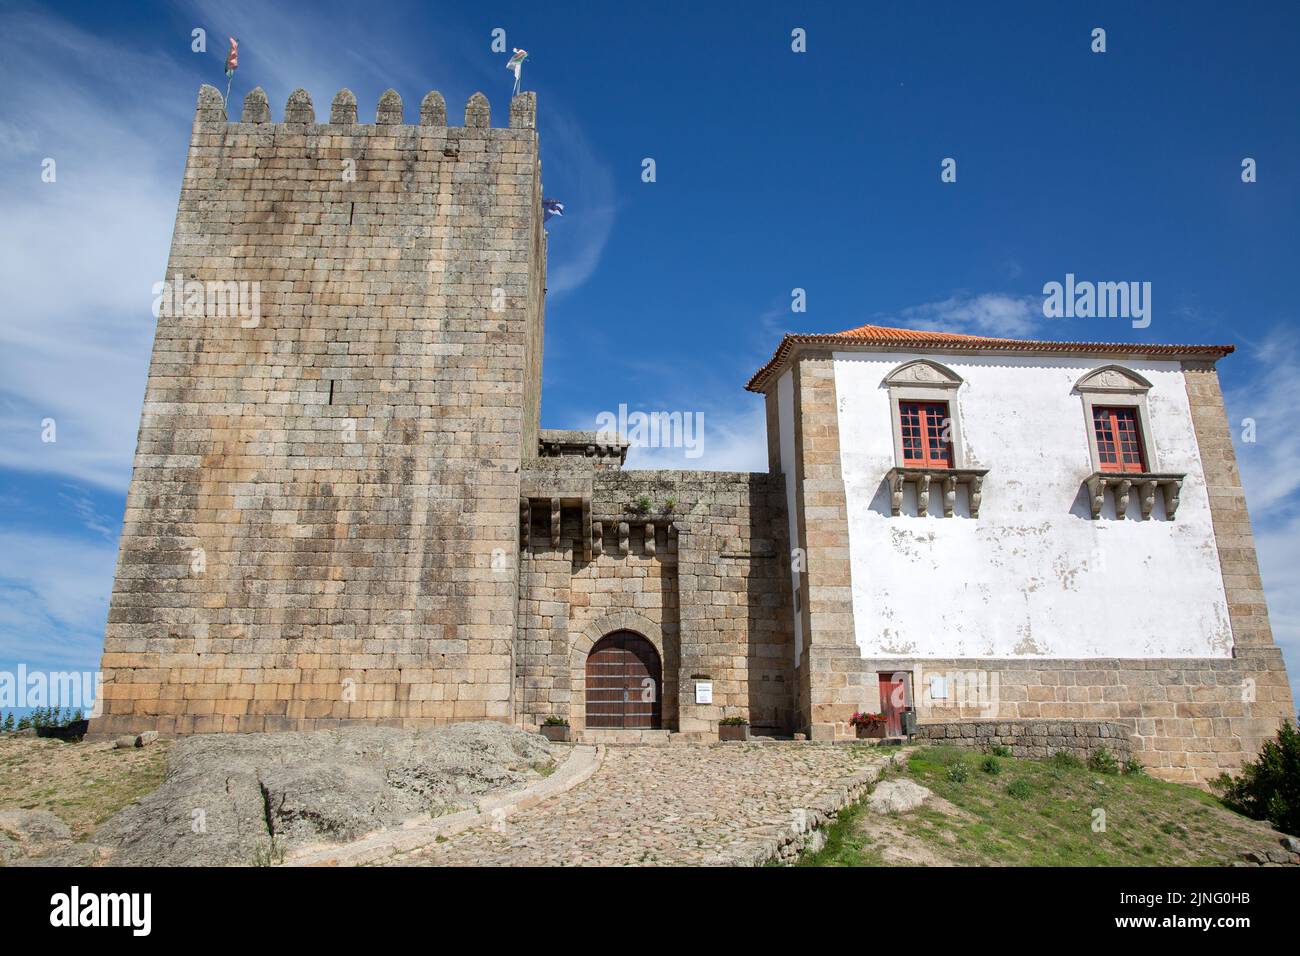 Facade of Belmonte Castle, Portugal Stock Photo